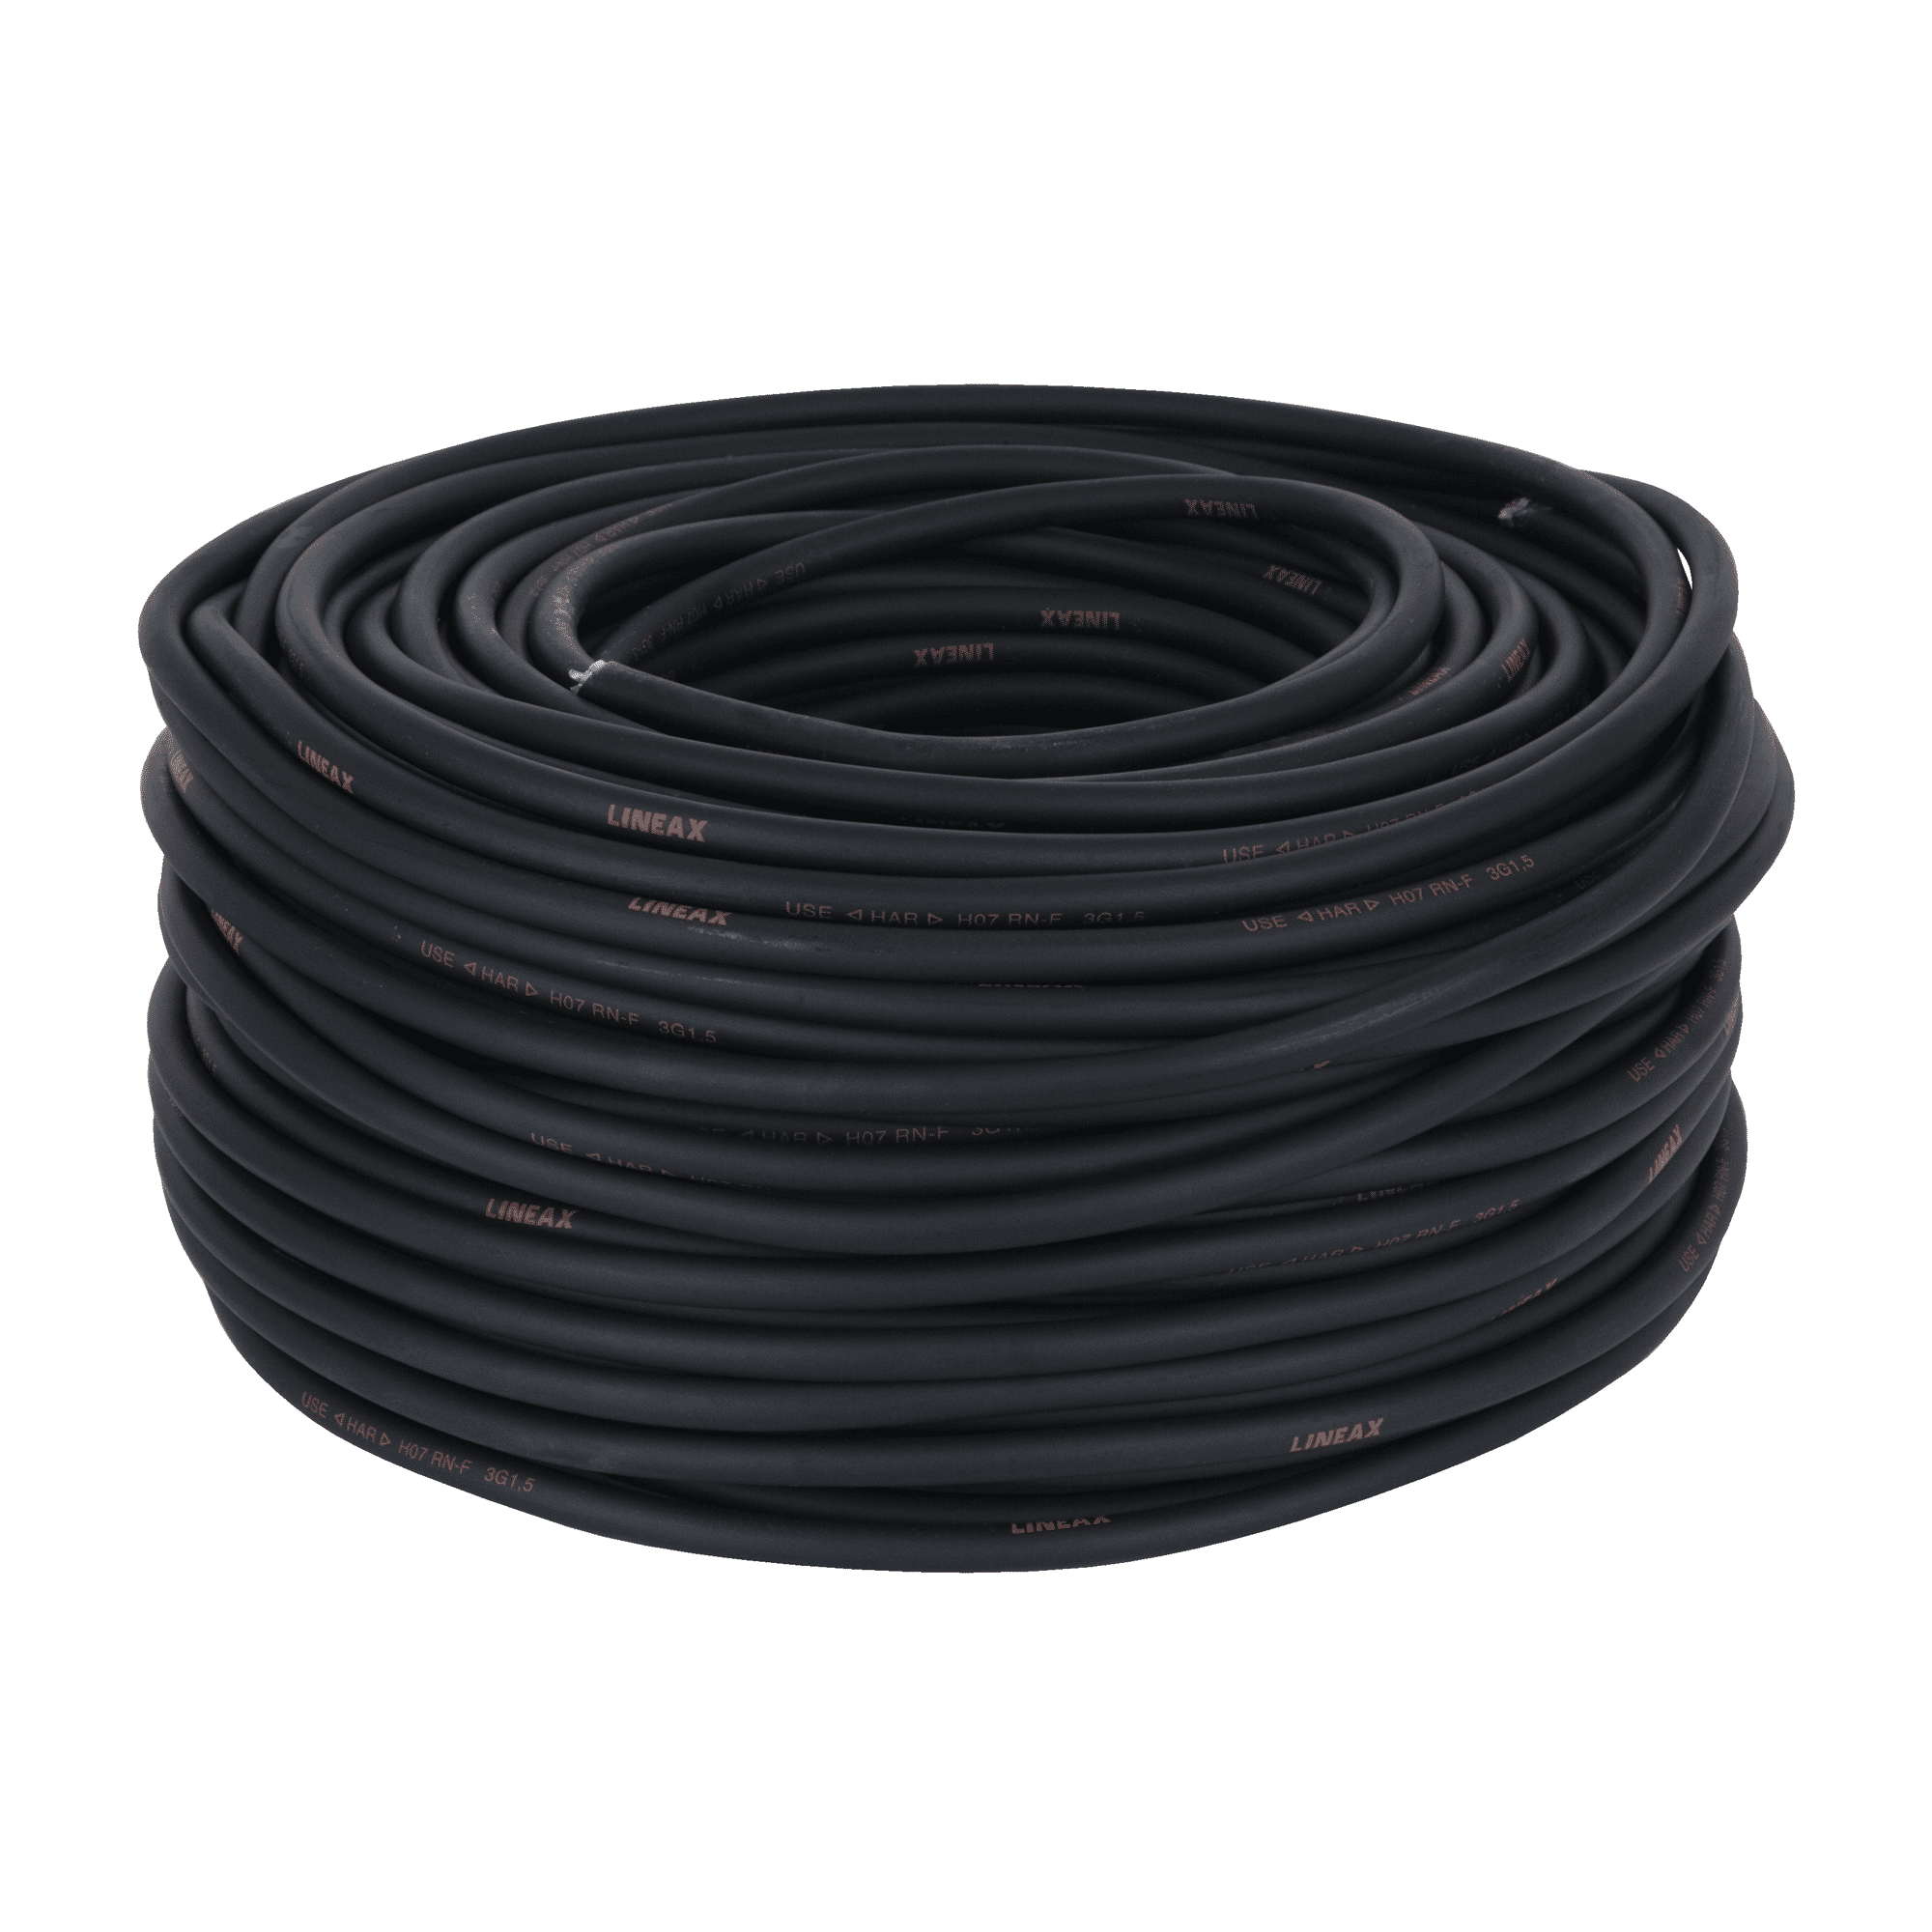 Lineax Neoprene Cable